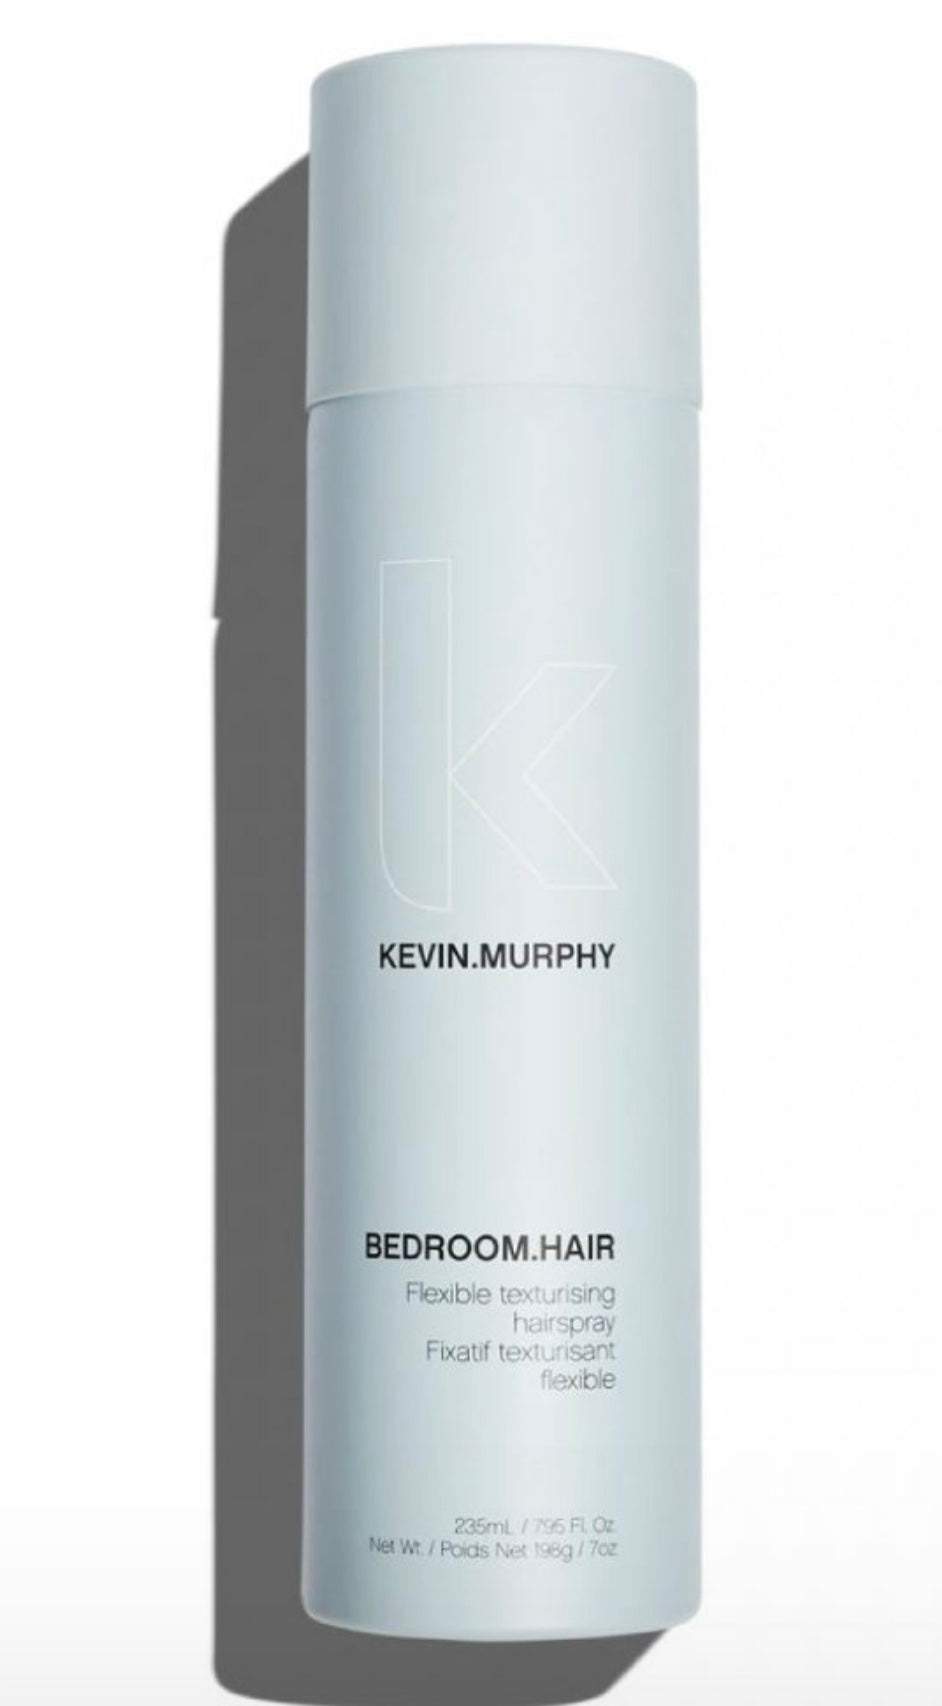 Kevin.Murphy - Bedroom.Hair   7.9 fl. oz. / 235 ml